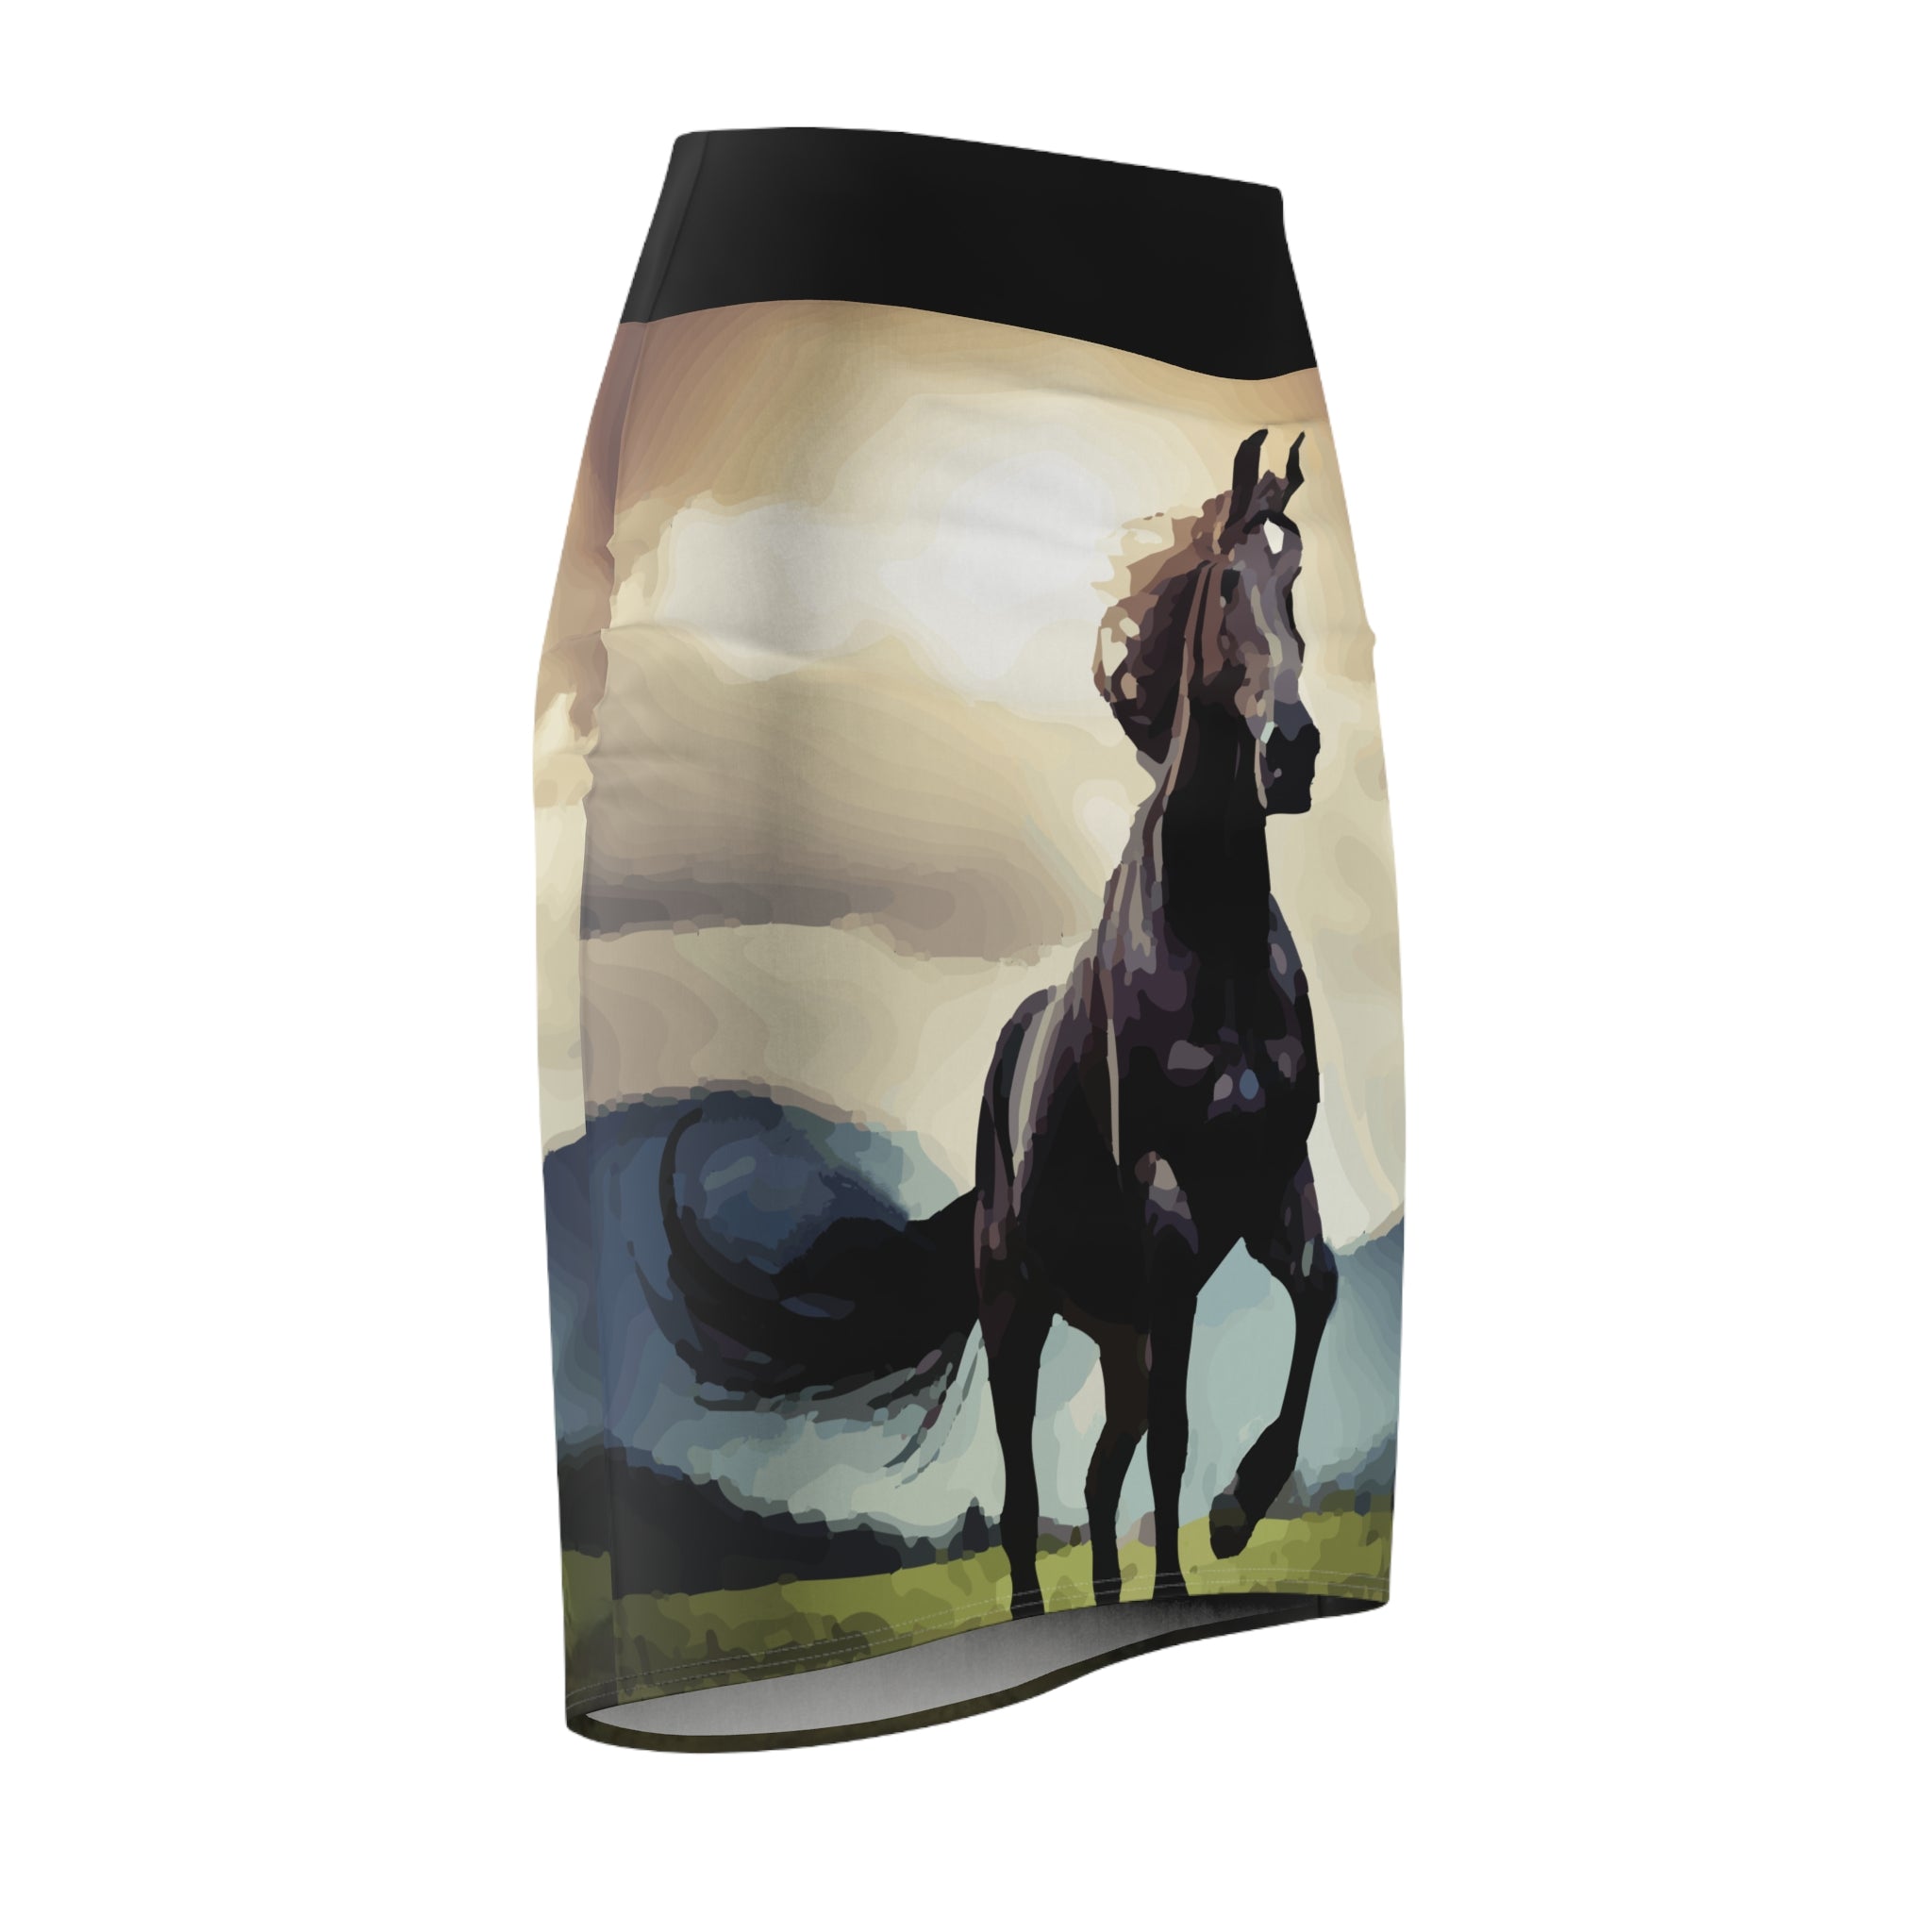 Women's Wild Black Horse Printed Pencil Mini Skirt